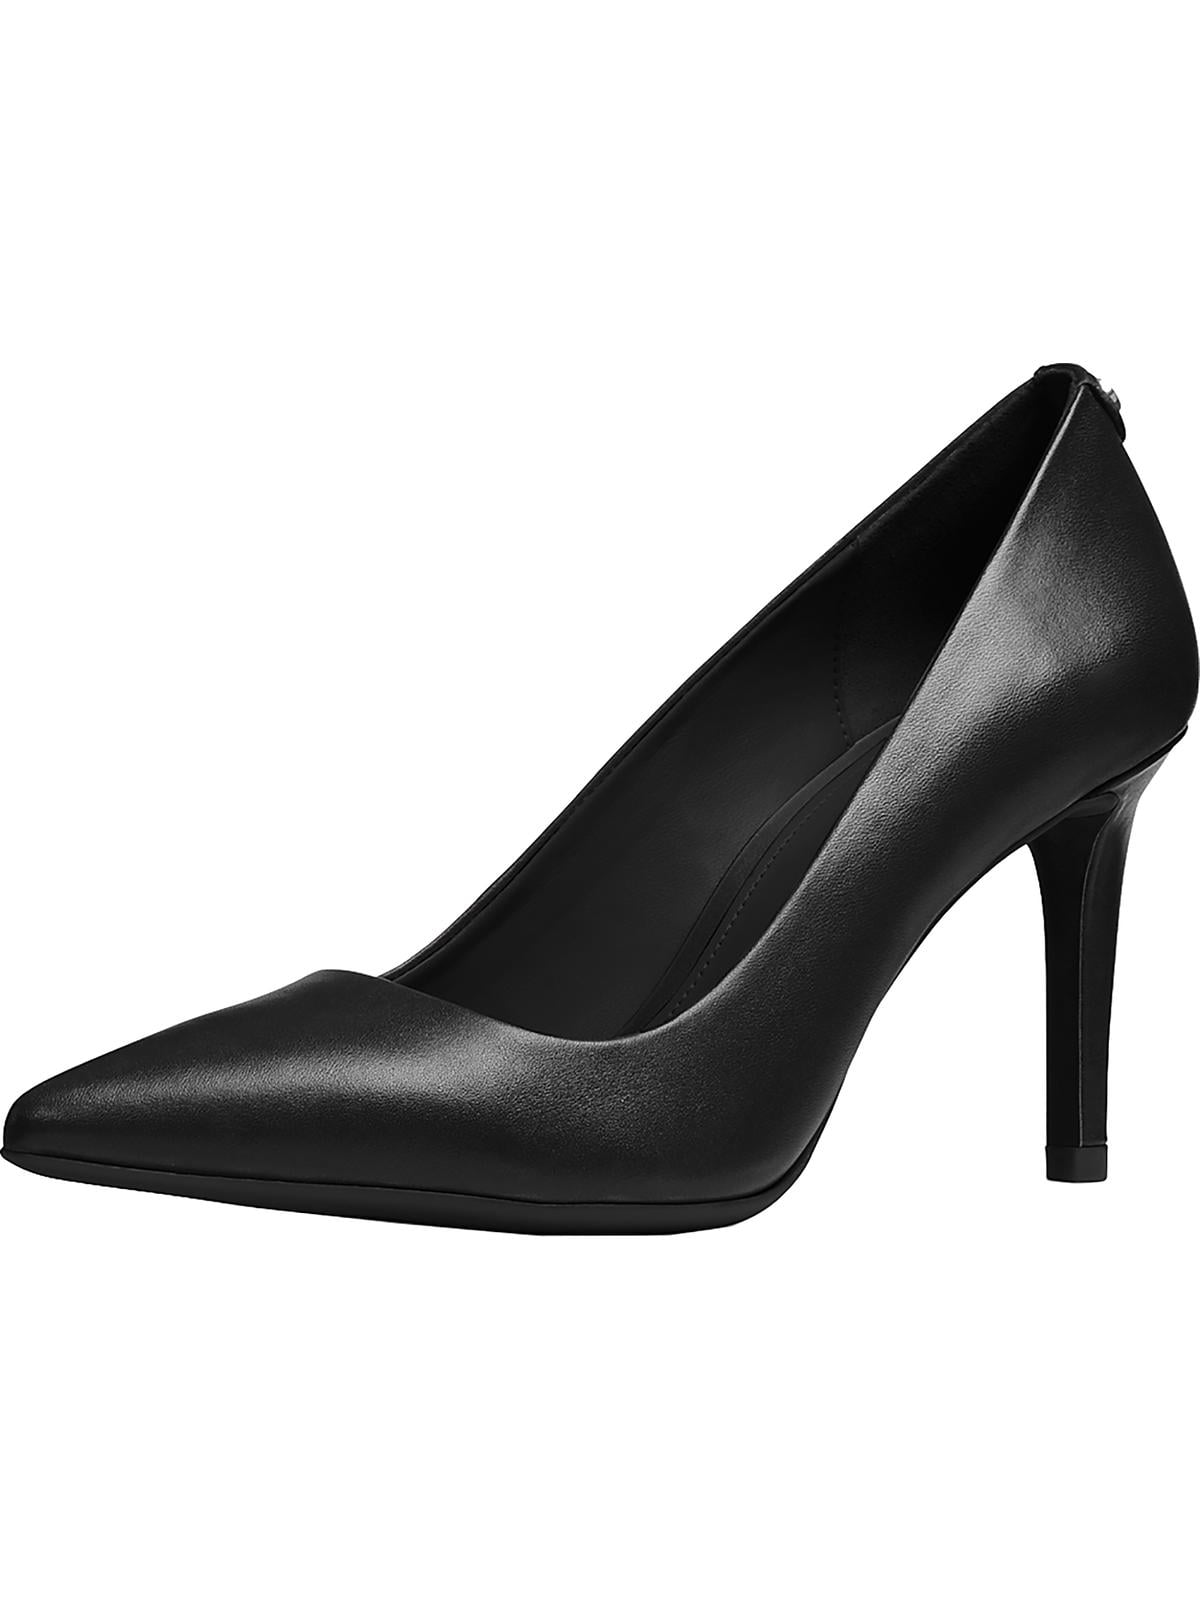 michael kors black dress shoes